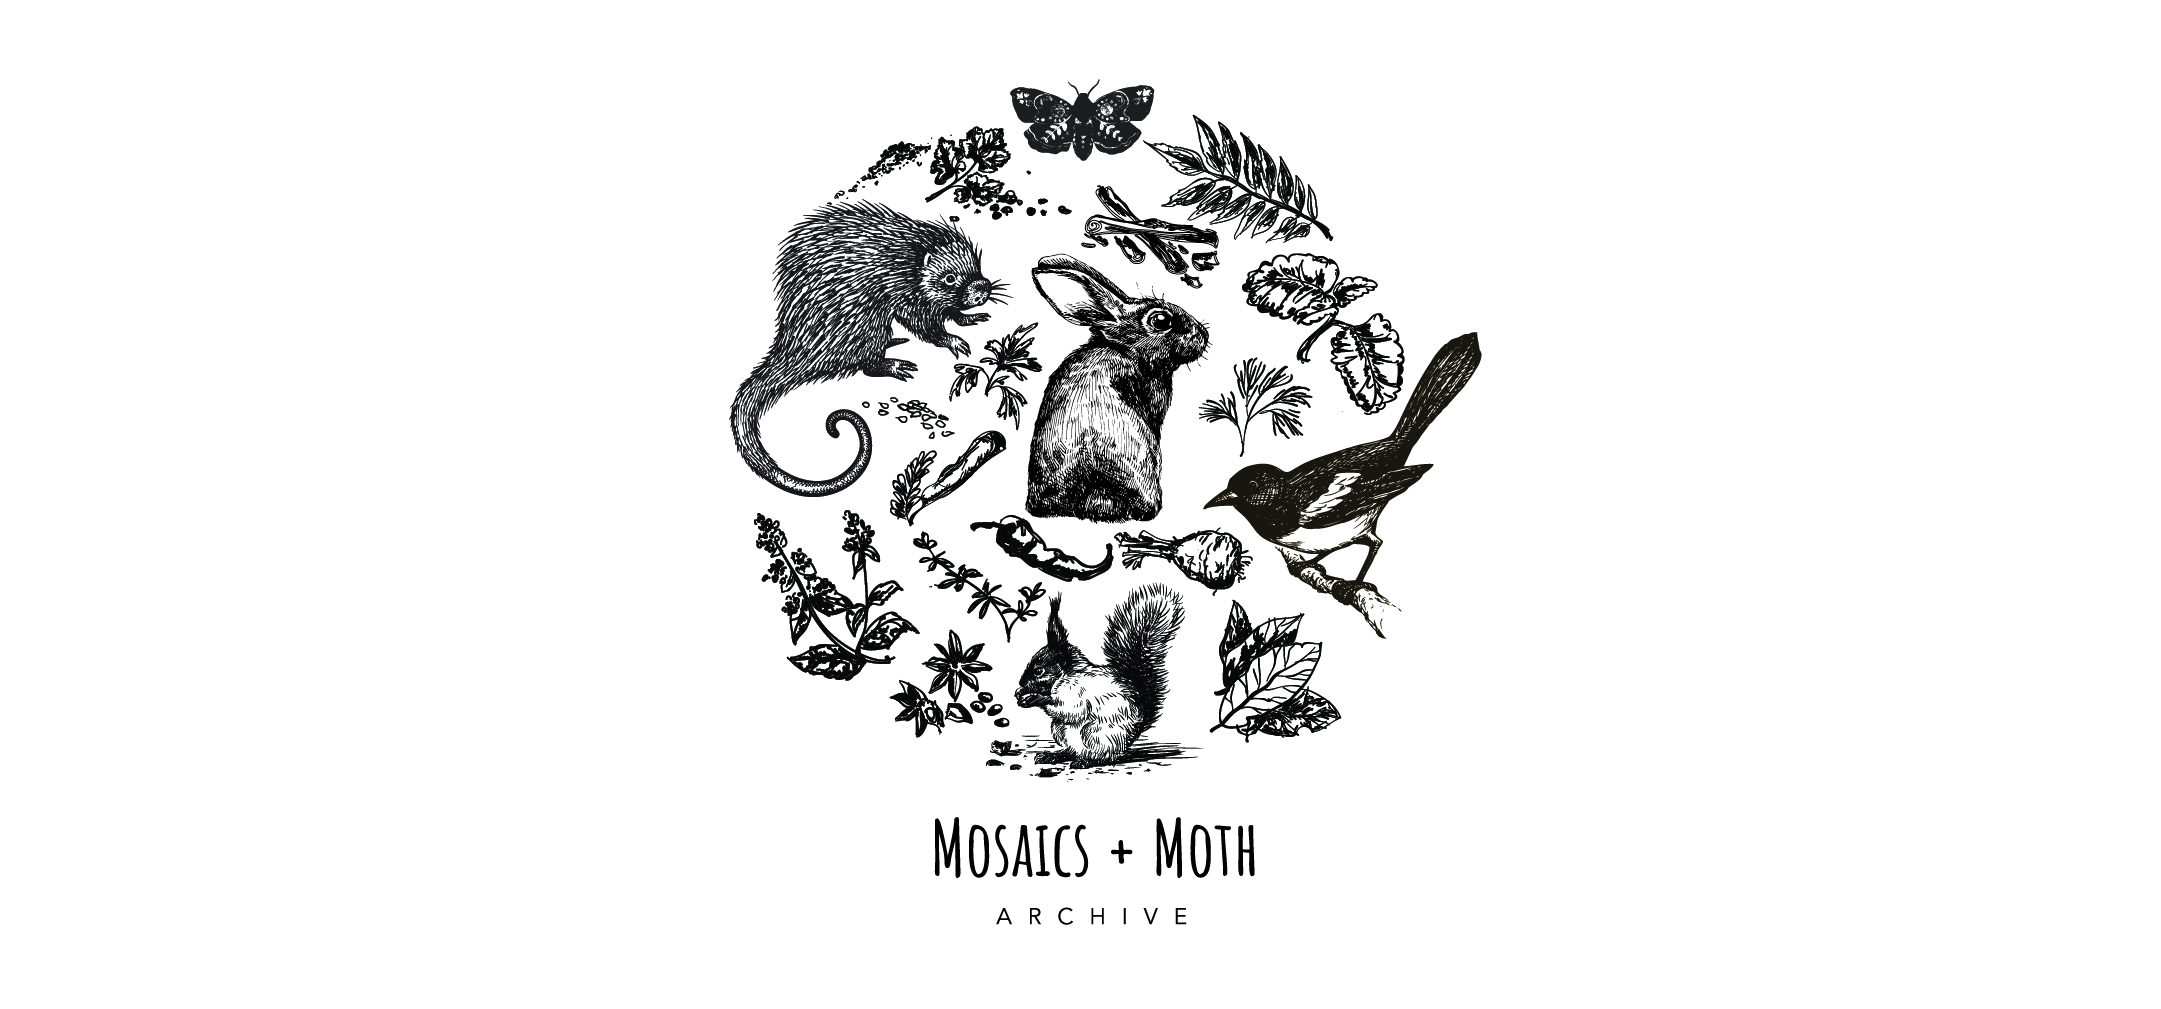 Mosaics + Moth Archive